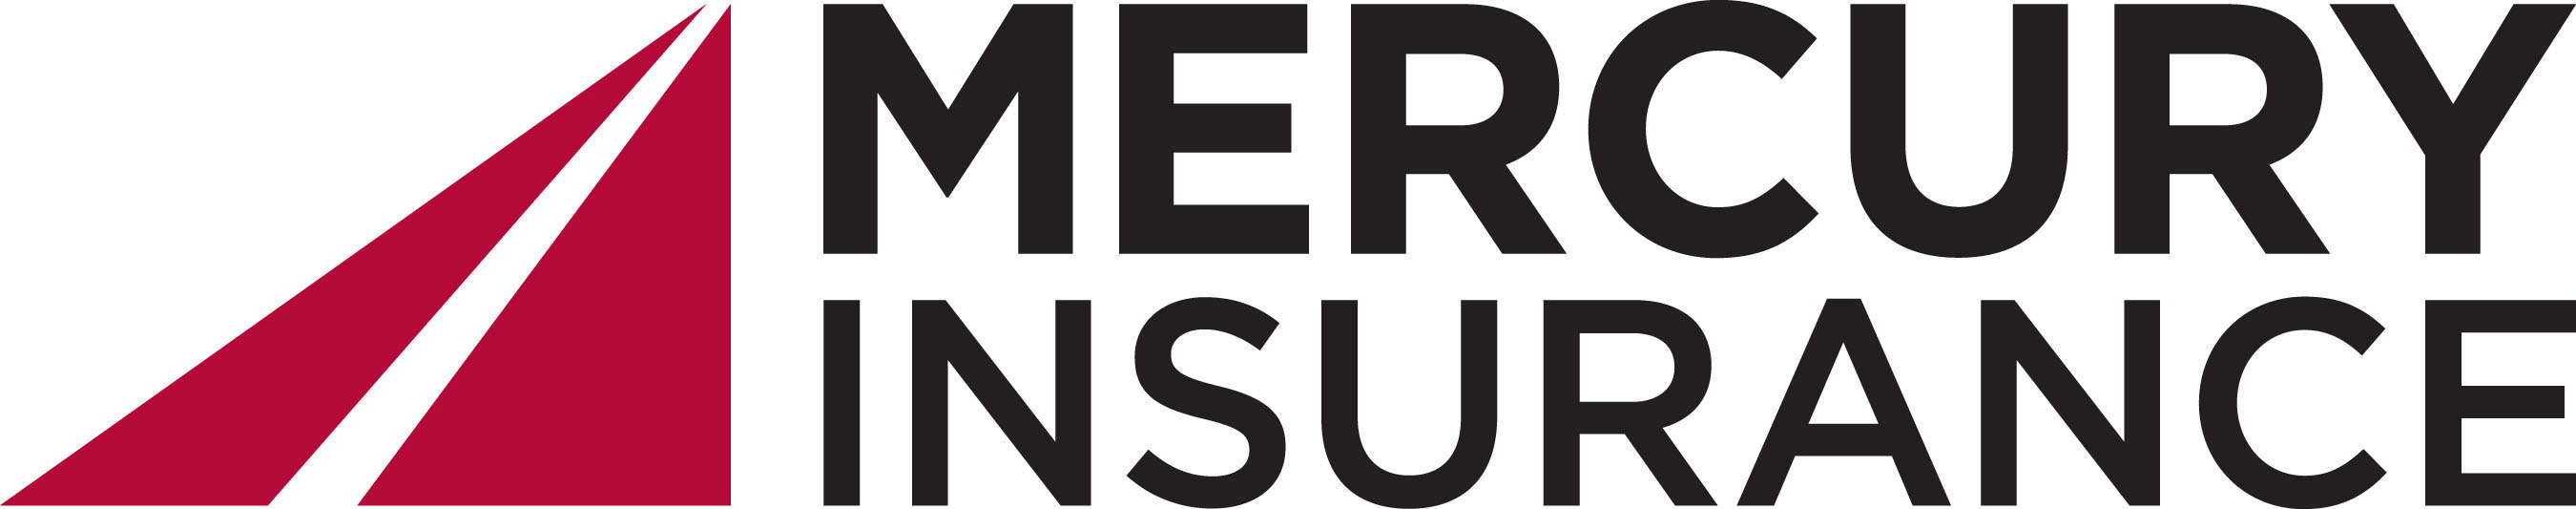 Mercury Insurance Group Logo photo - 1